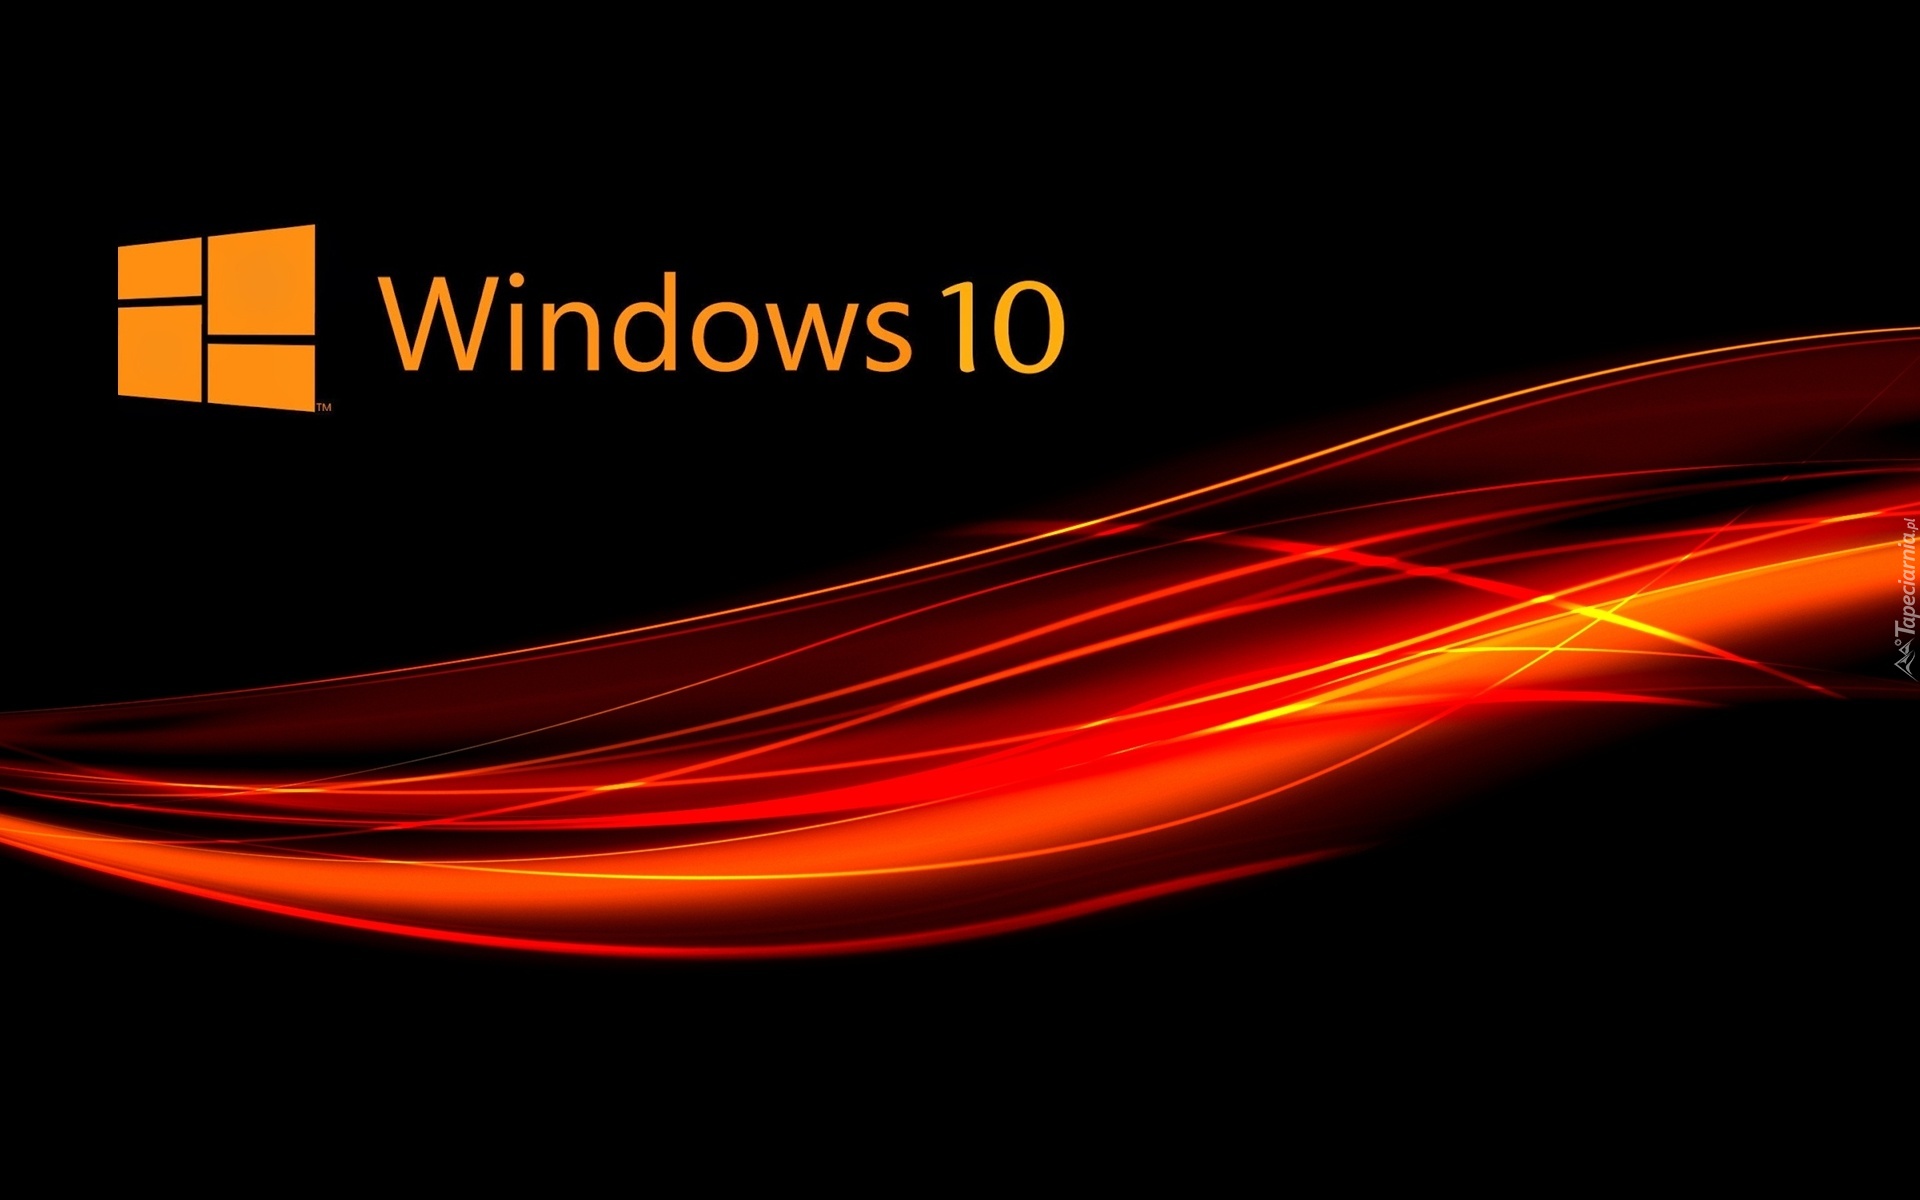 Windows 10, System